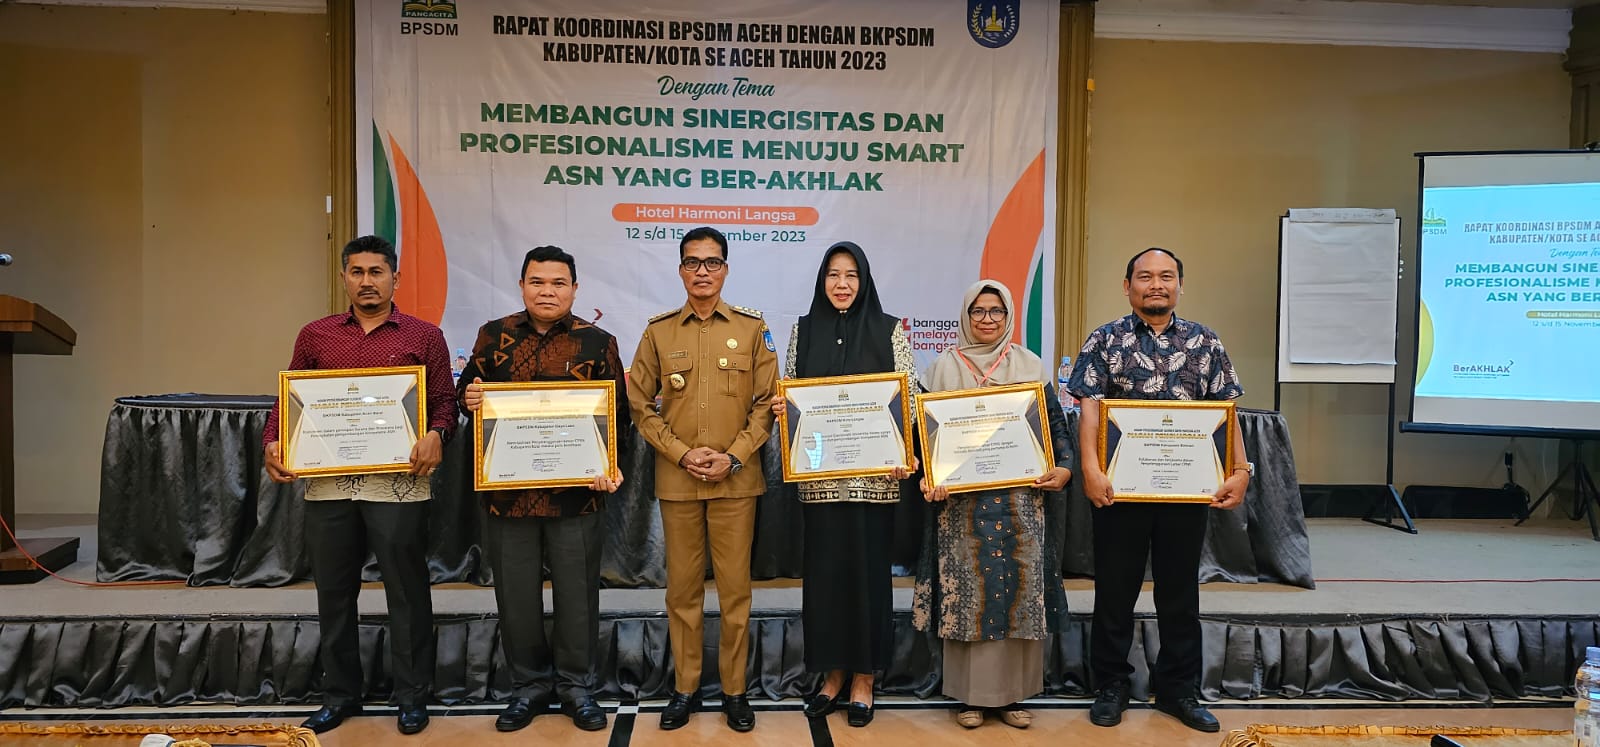 Dinas BKPSDM Kota Langsa menerima penghargaan terbaik dari Badan Pengembangan Sumber Daya Manusia (BPSDM) Aceh